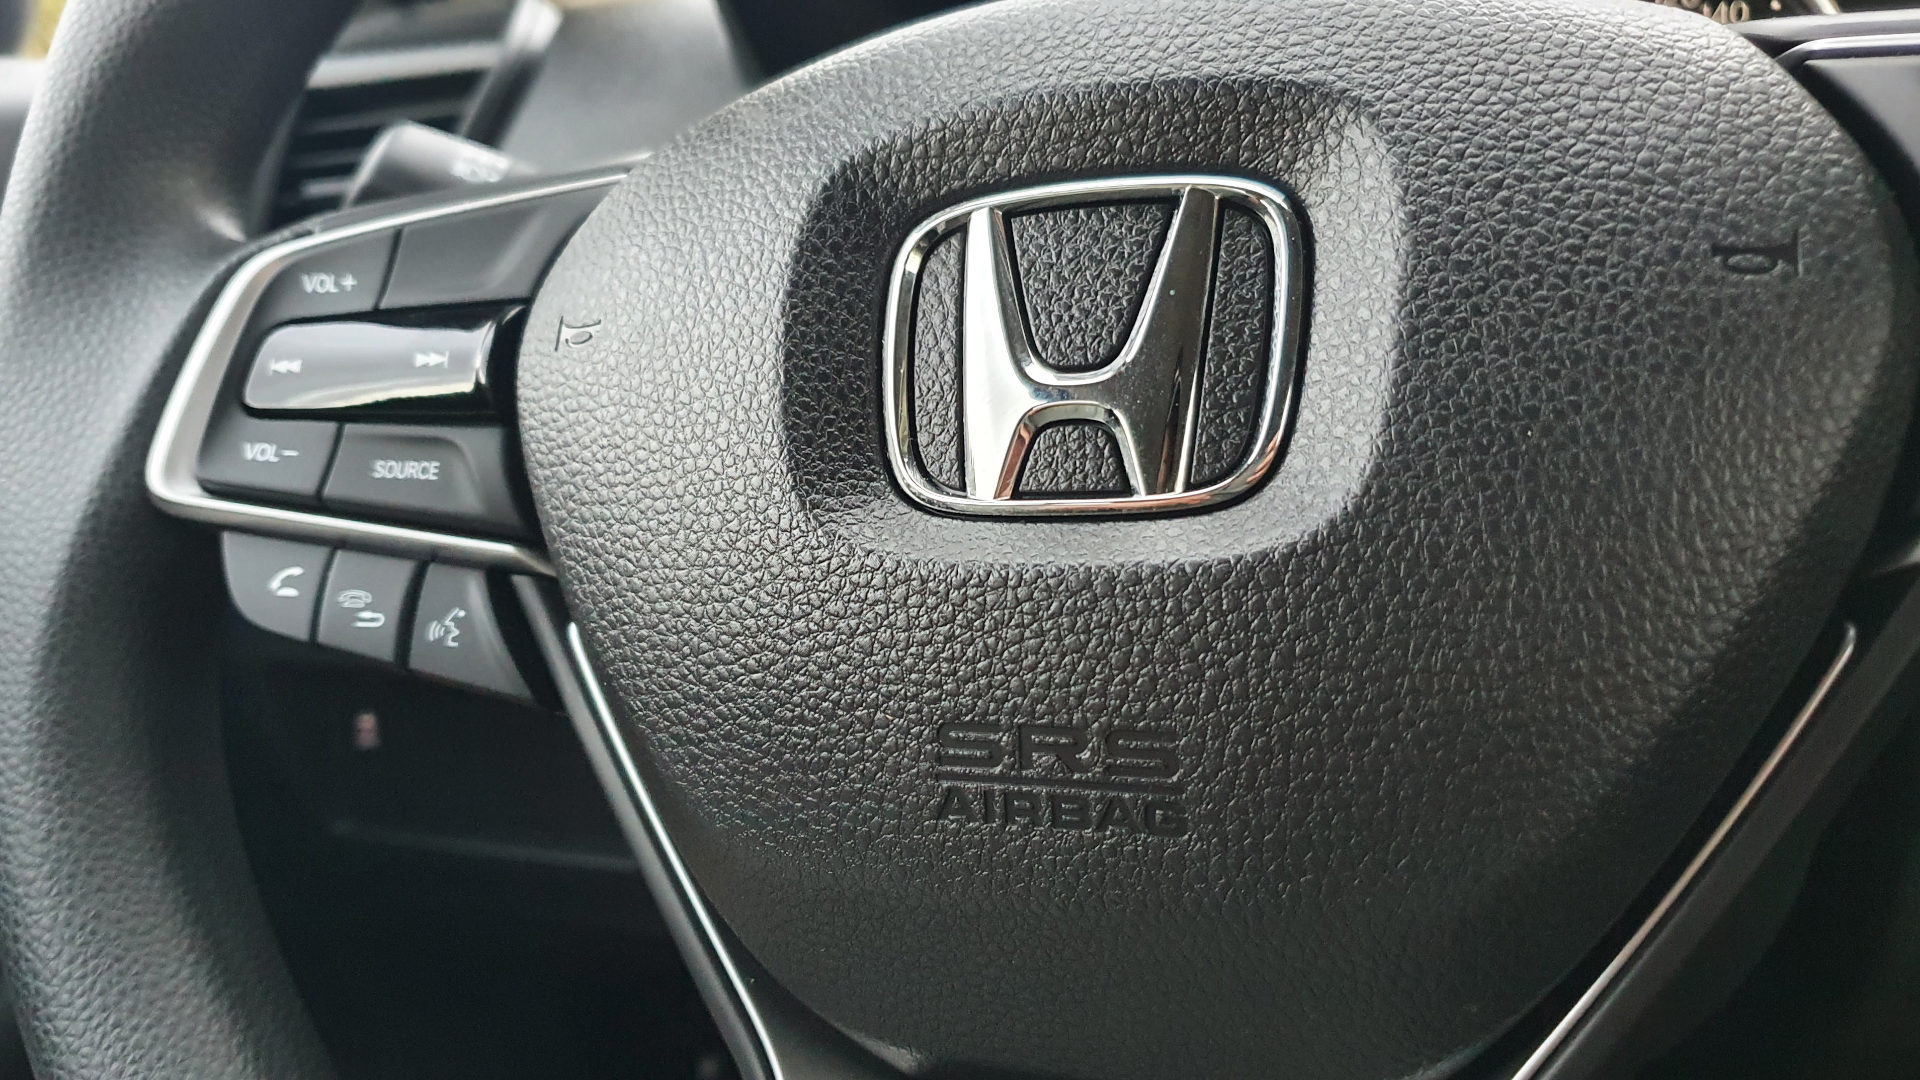 Image of the Honda logo